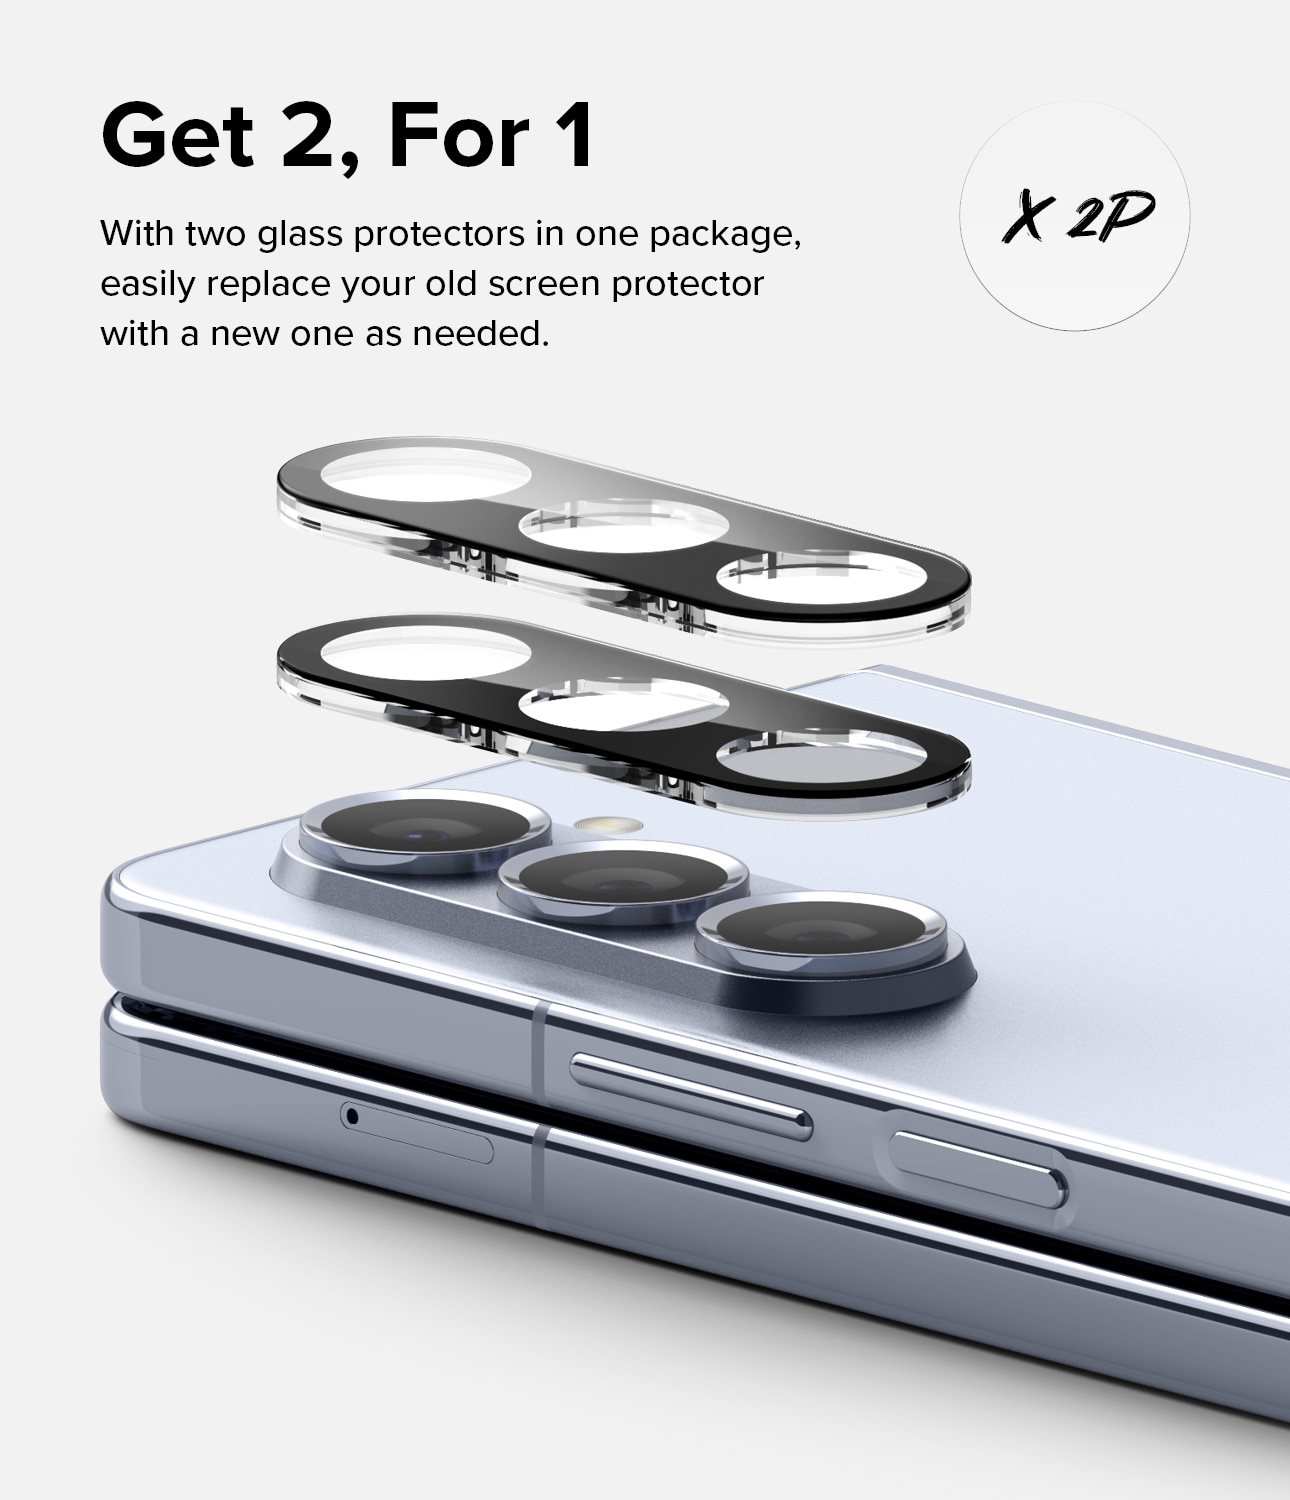 Samsung Galaxy Z Fold 5 Camera Protector Glass (2-pack) Transparent